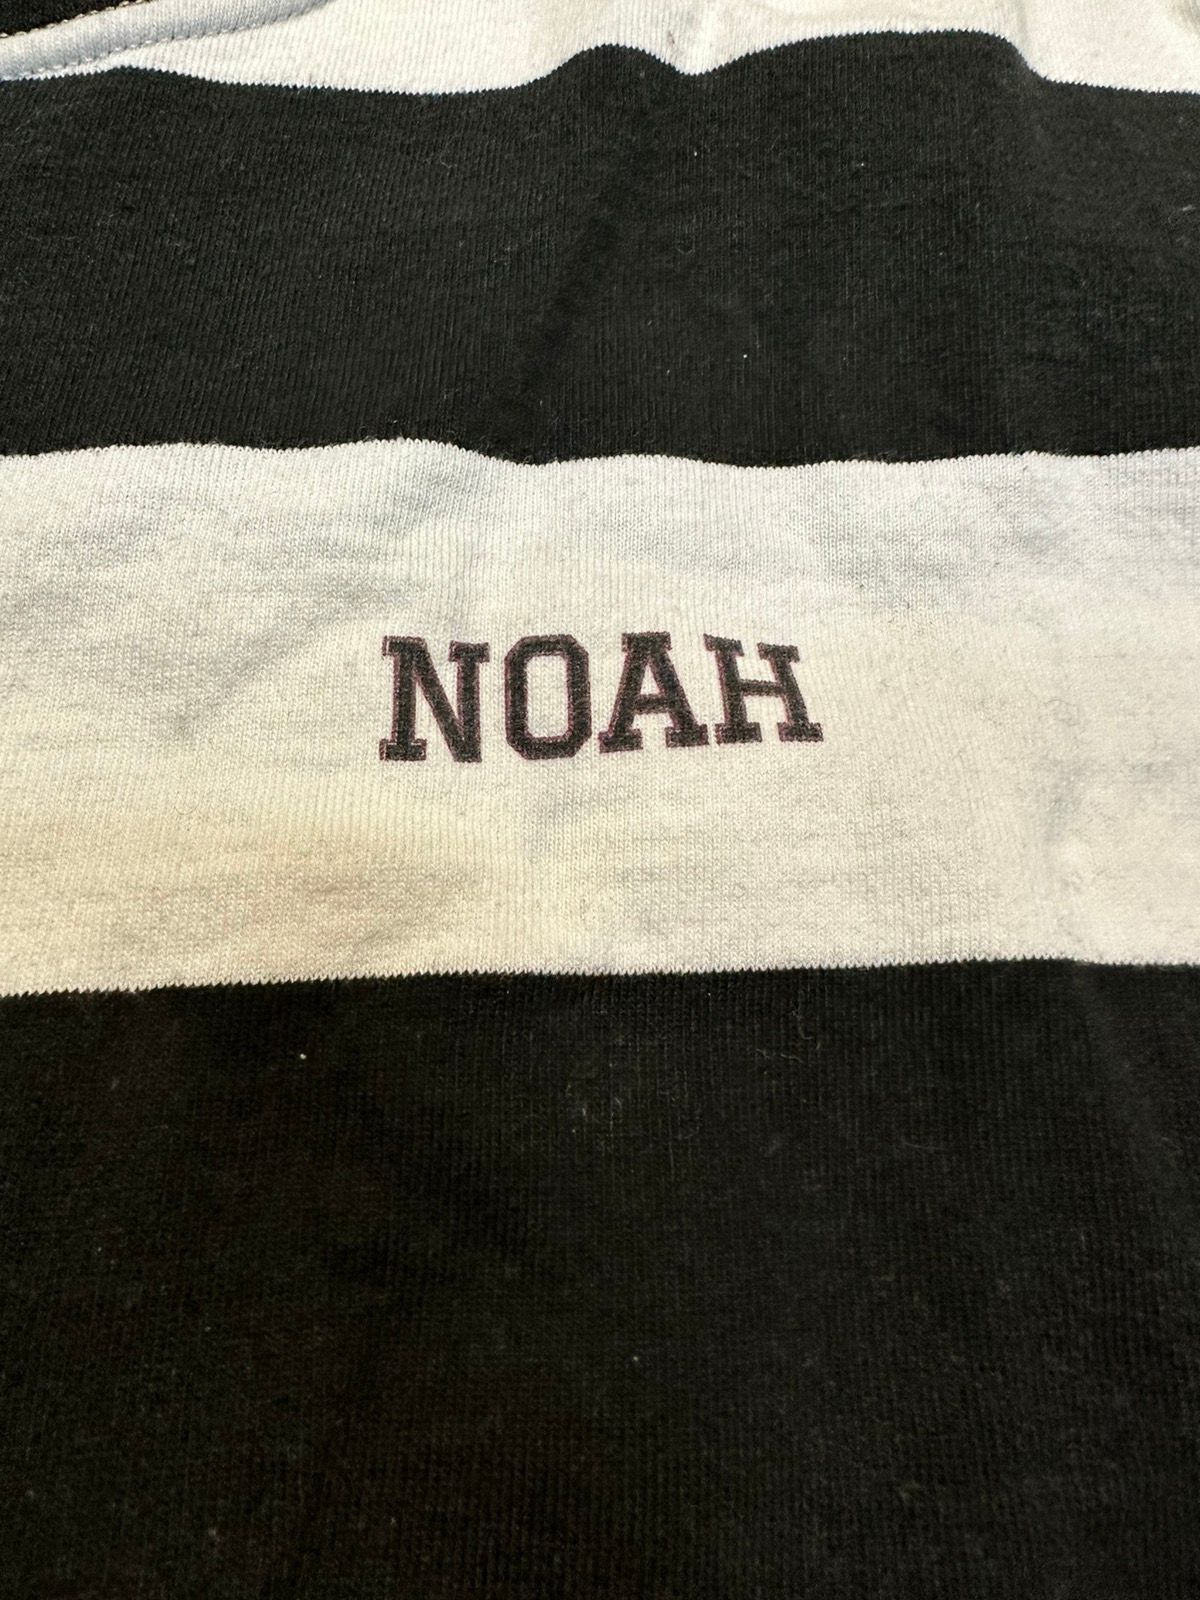 Noah 2016 NOAH CLOTH TEE SHIRT HARD TO FIND Size US L / EU 52-54 / 3 - 5 Preview